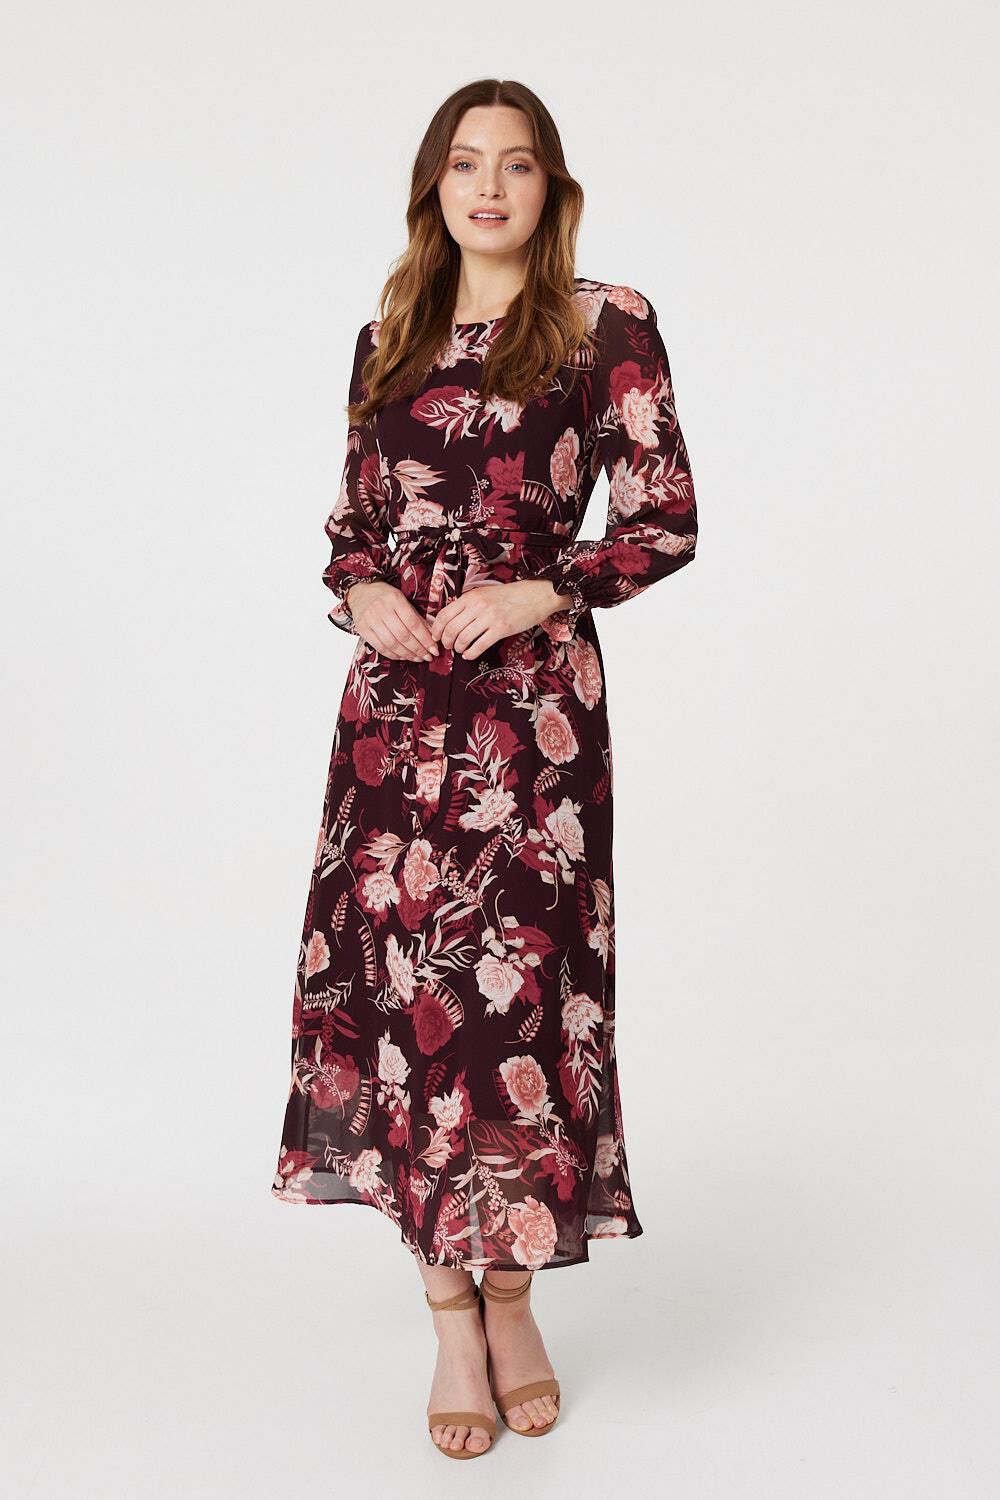 Izabel London Burgundy - Floral Long Sleeve A-Line Dress, Size: 16